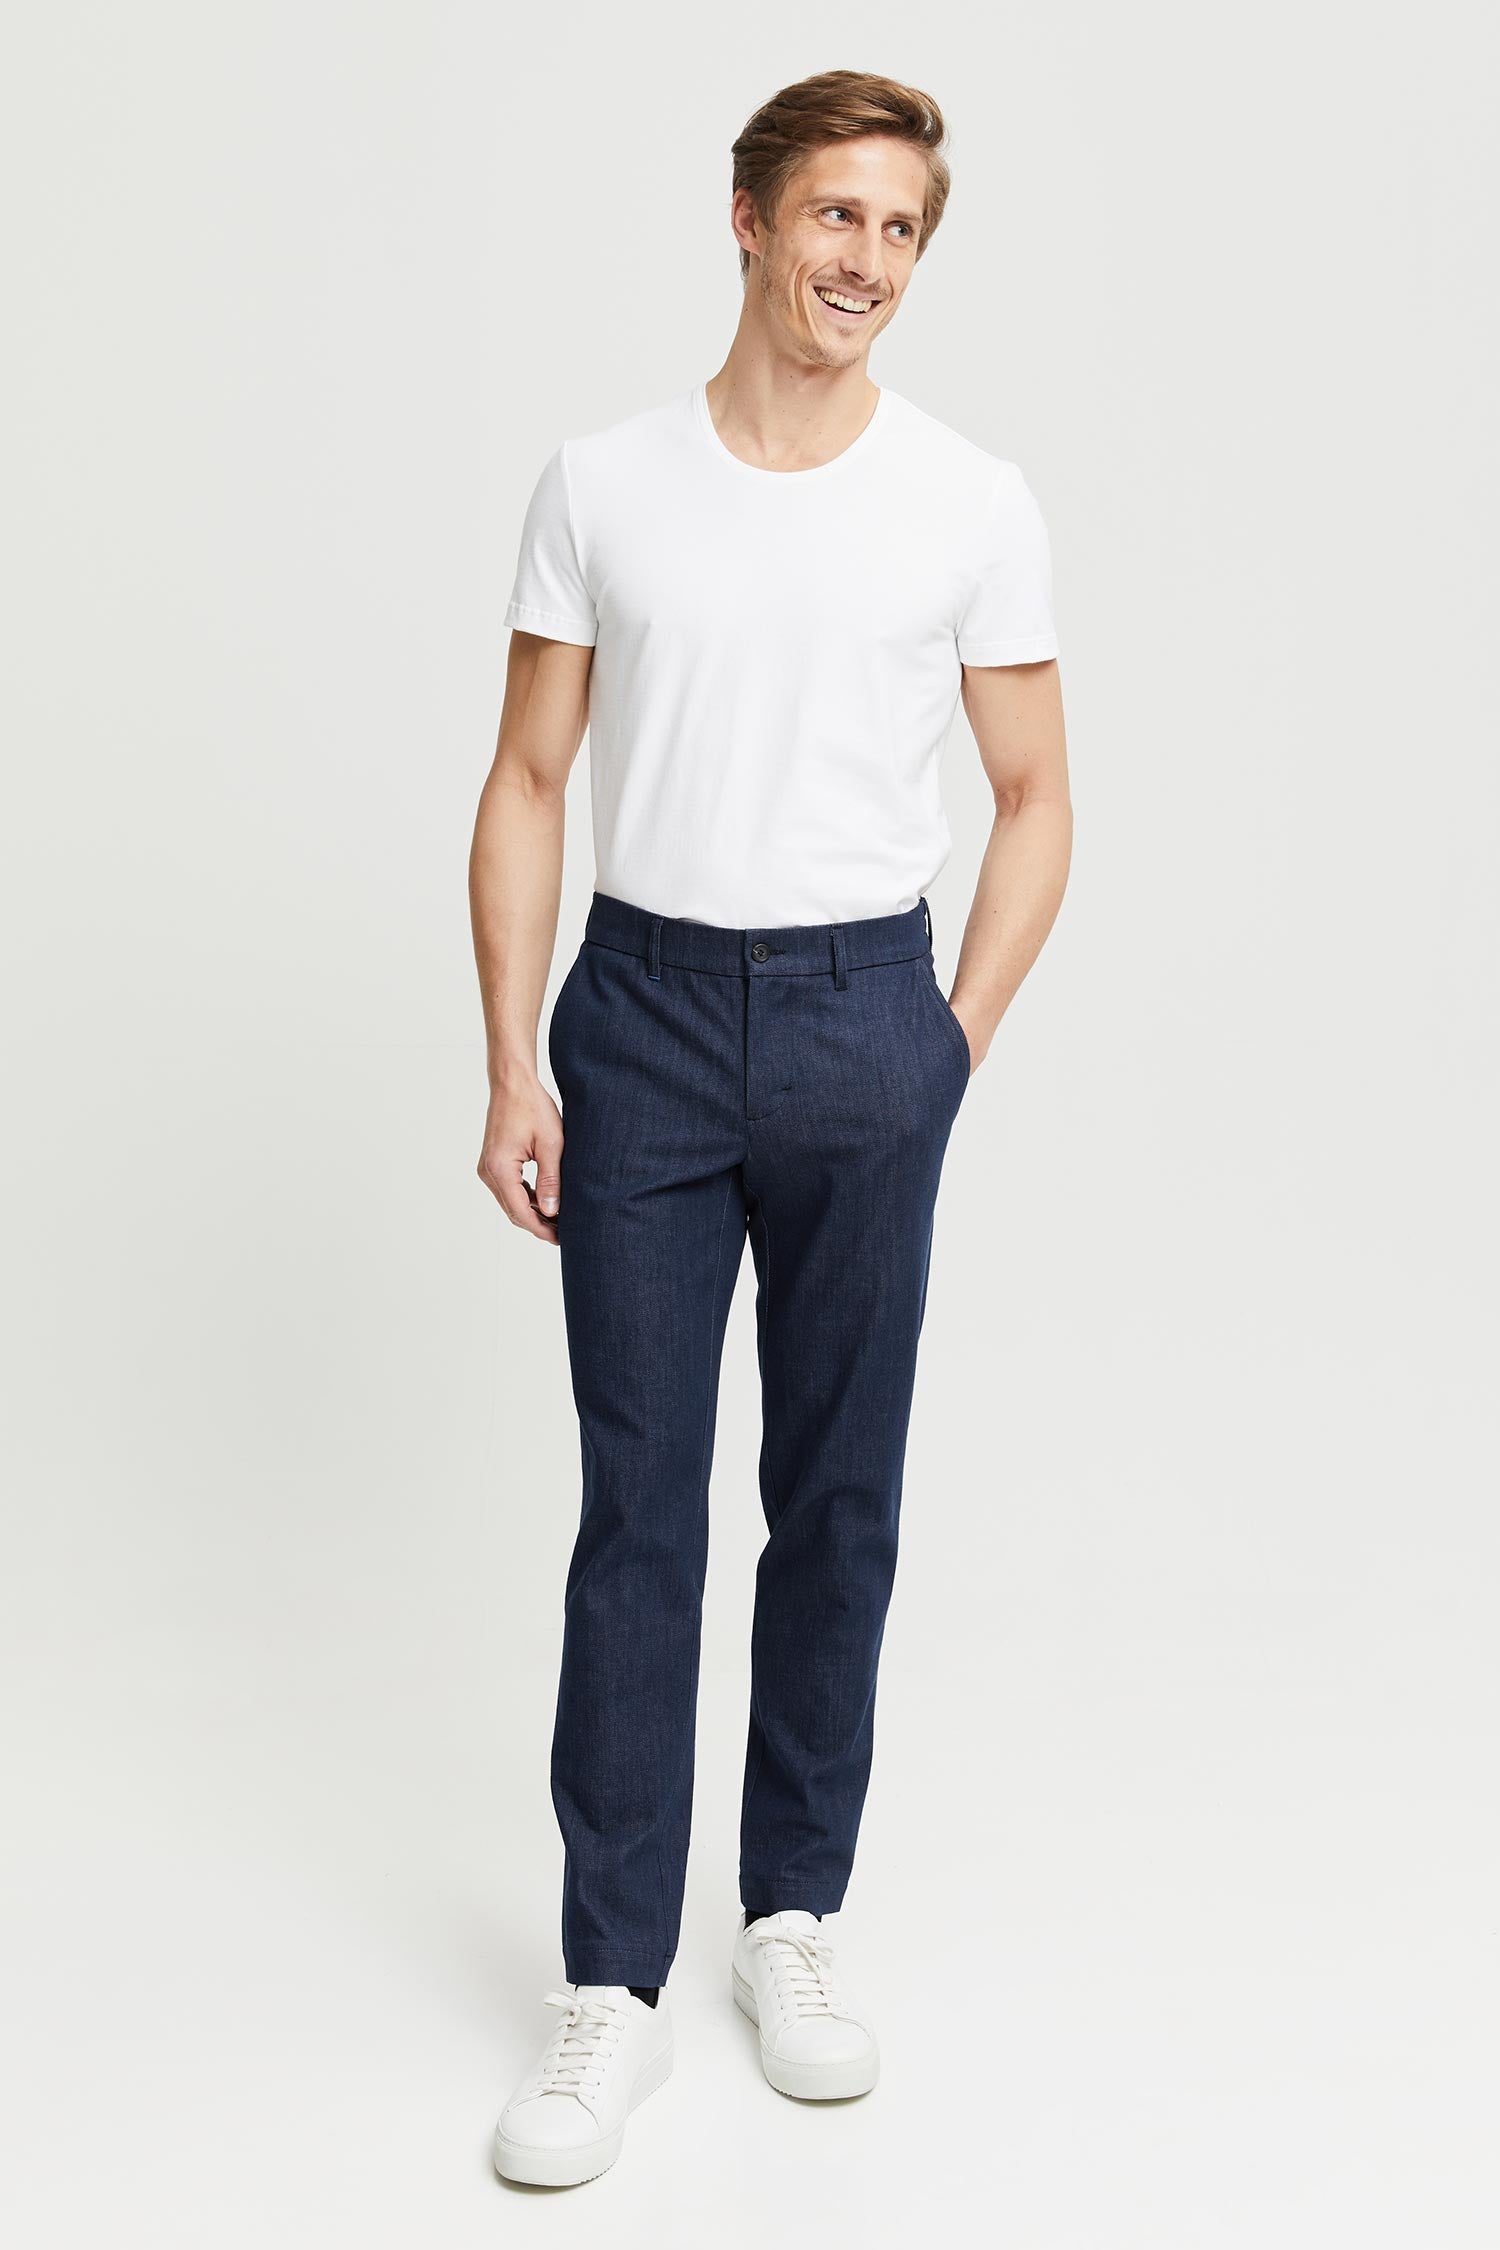 Frenn Seppo premium quality sustainable GOTS organic cotton denim trousers indigo blue